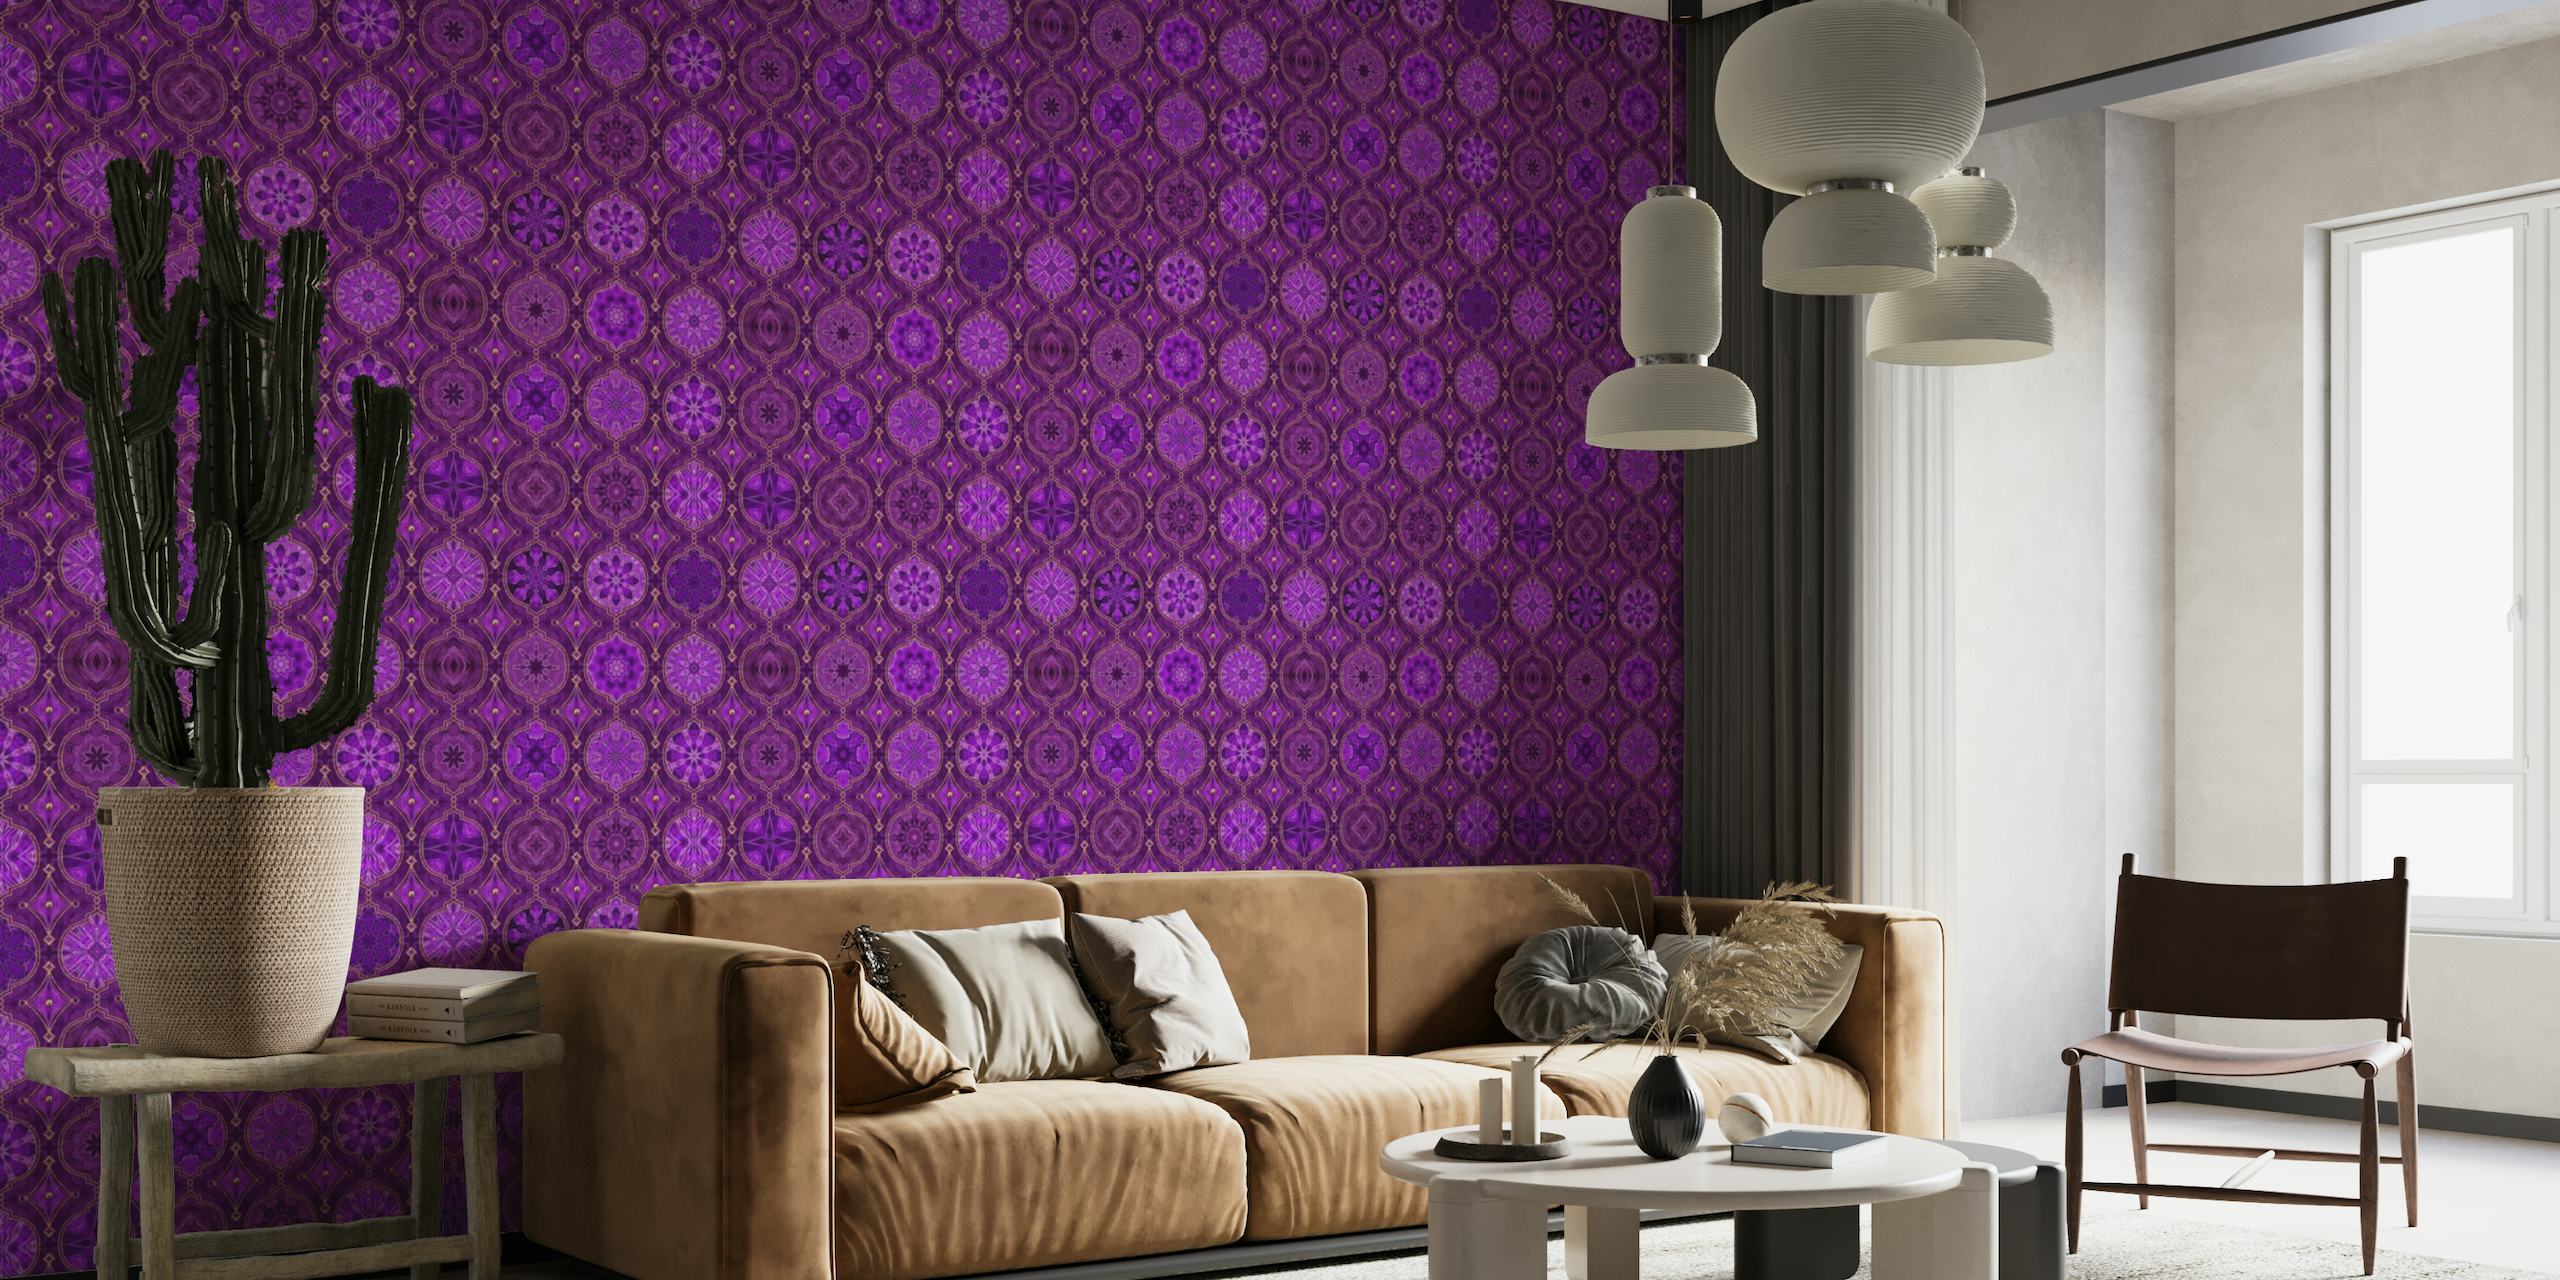 Treasures of Morocco Oriental Tile Design Fuchsia Purple Gold behang